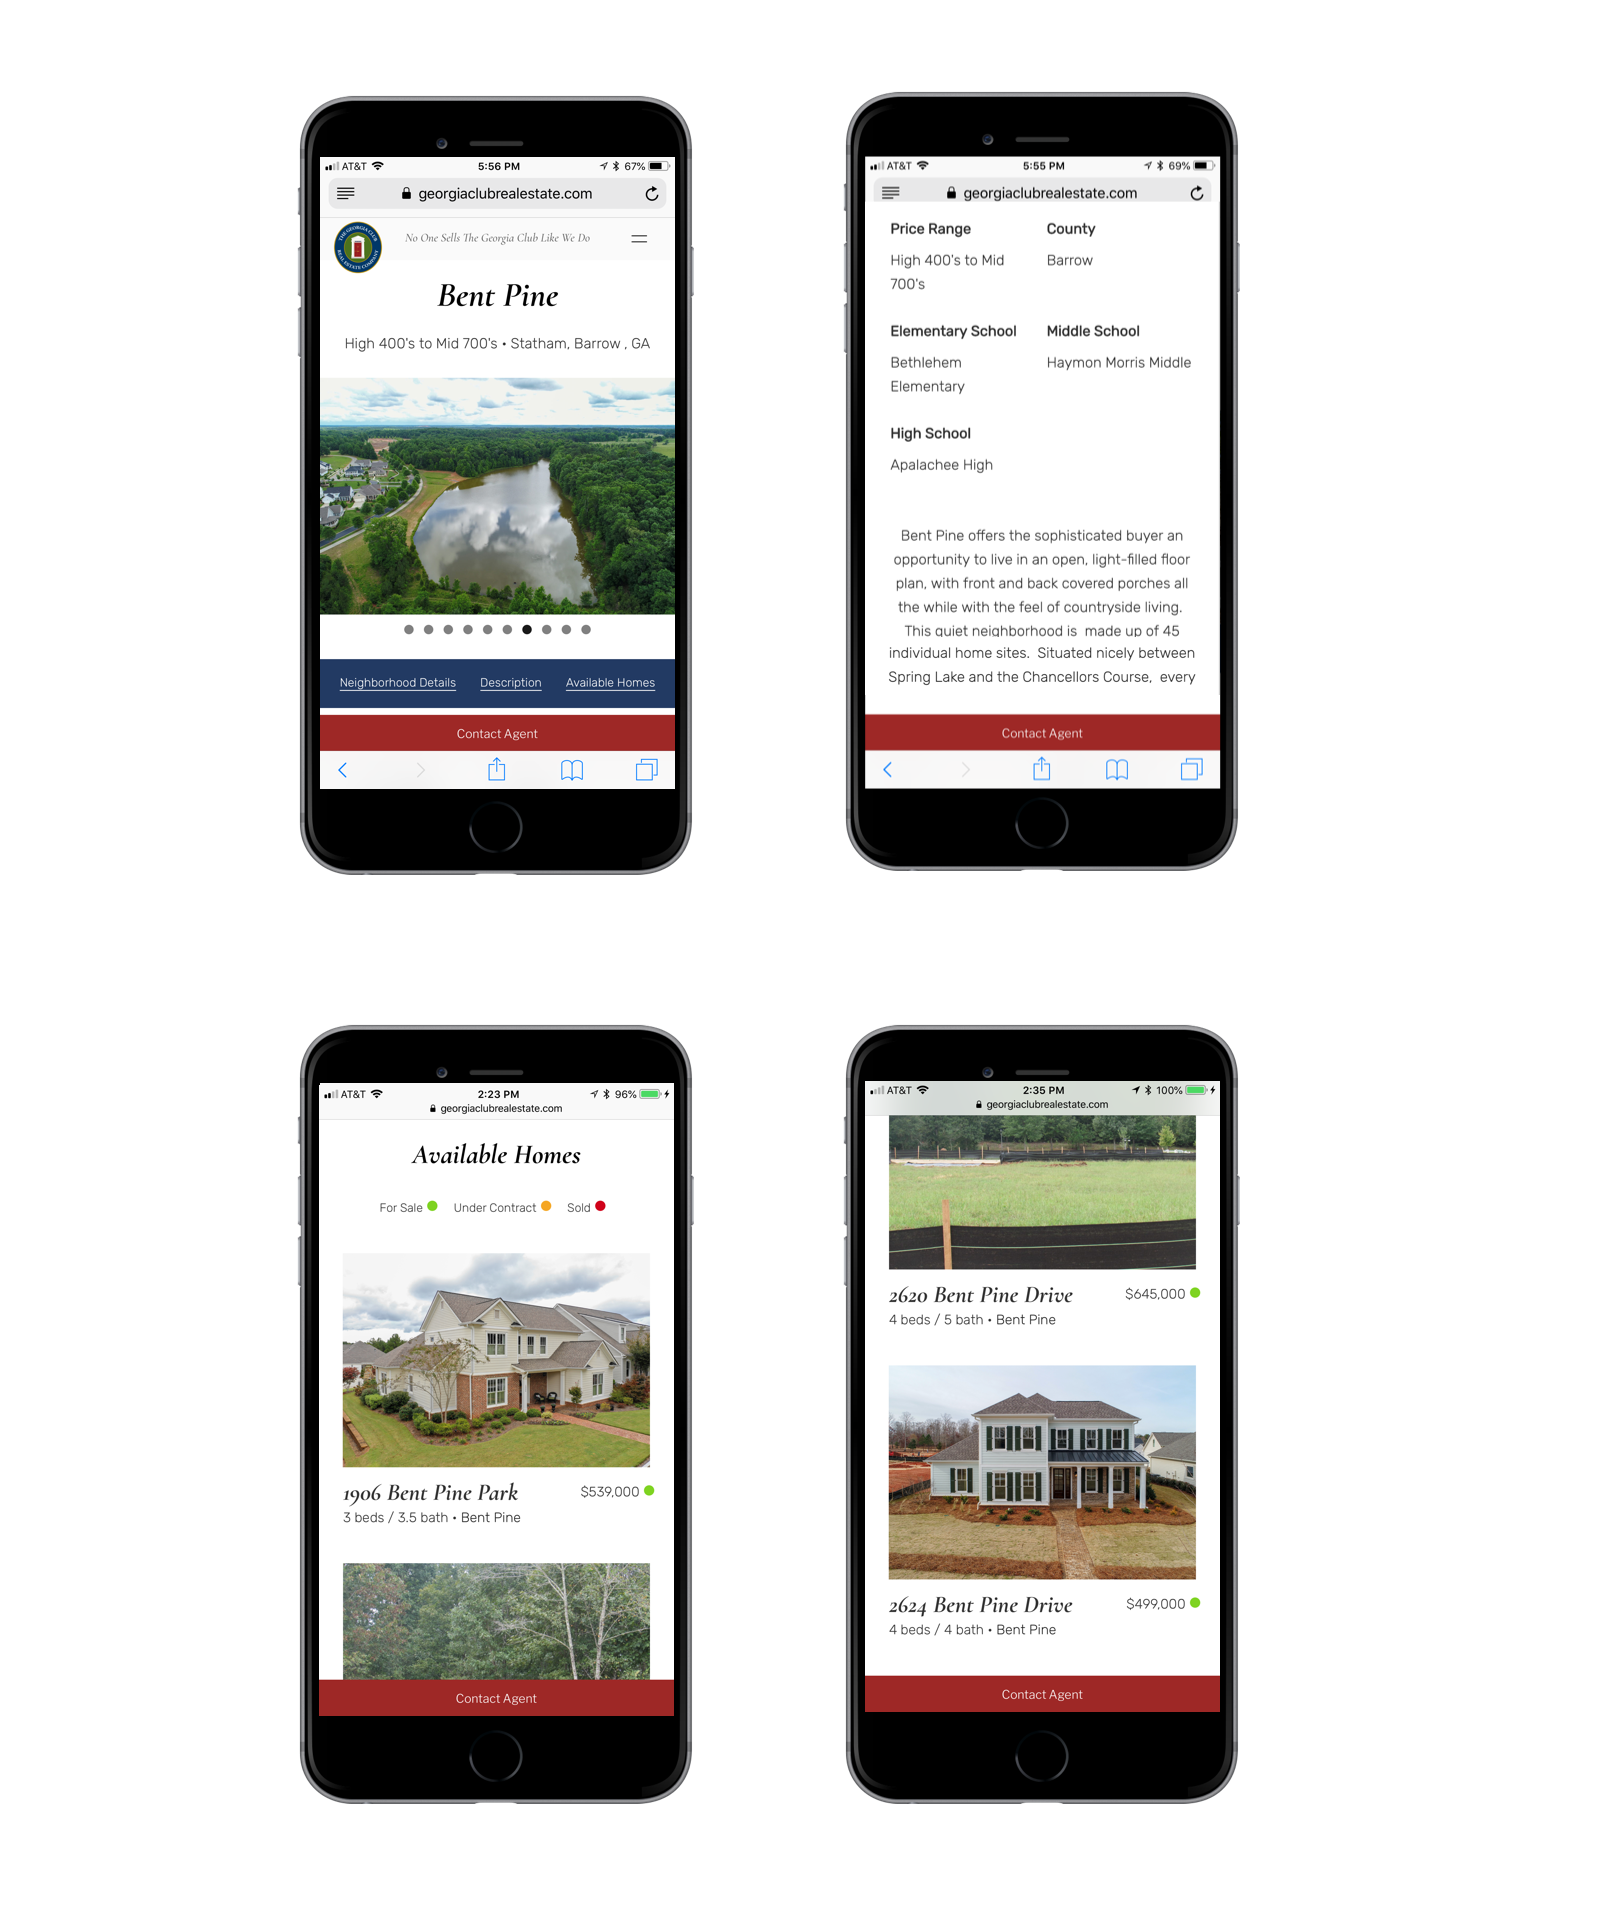 The Georgia Club Real Estate Company neighborhoods mobile